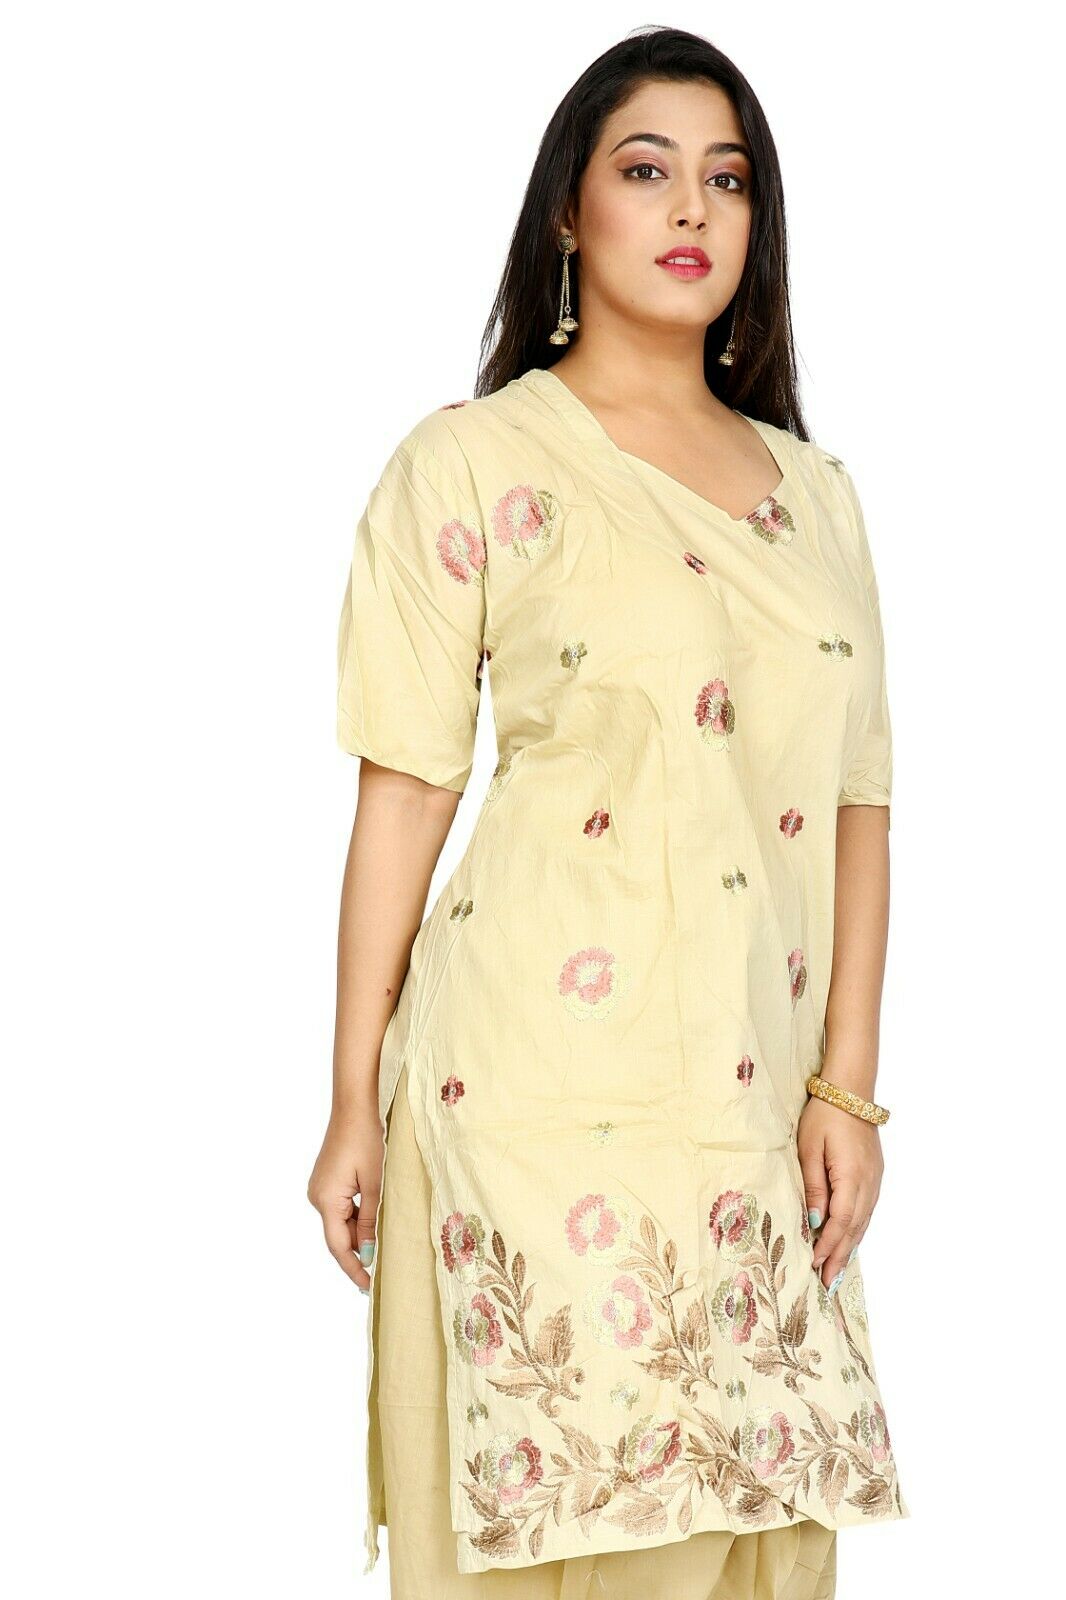 Light Yellow Cotton Summer  salwar kameez  Plus size 56 Boutique New arrivals